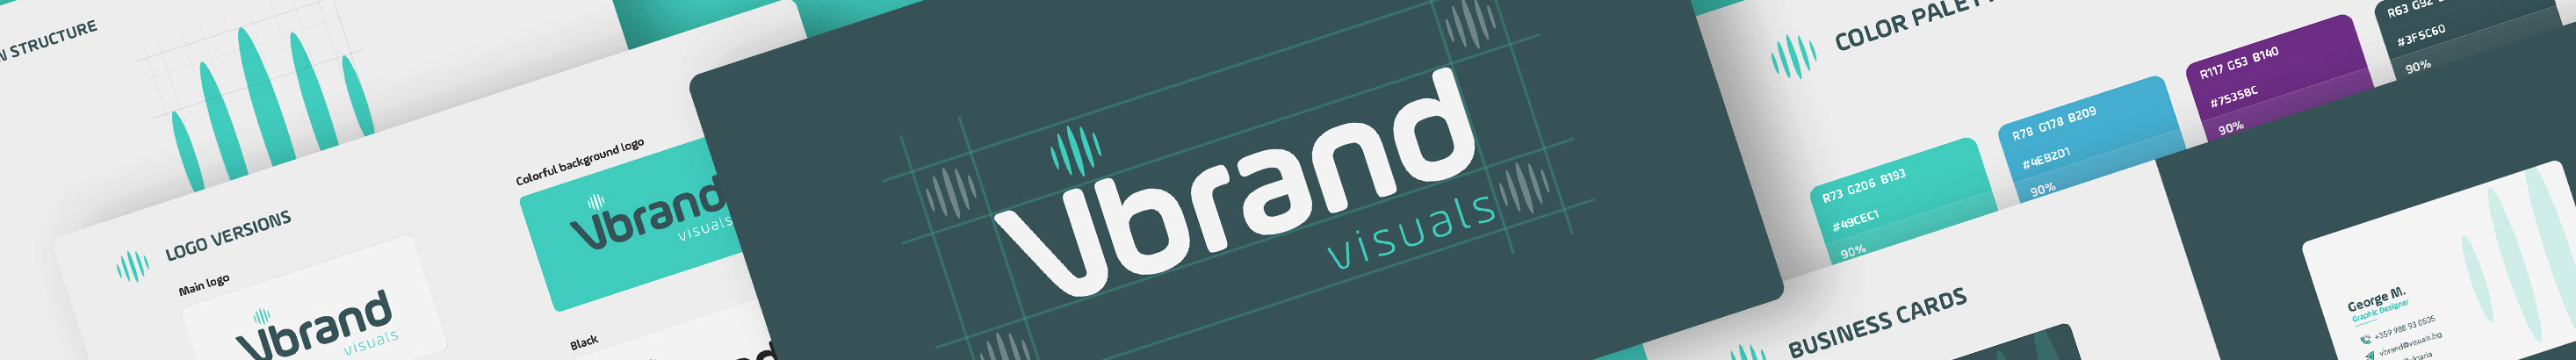 VBrand Visuals's profile banner